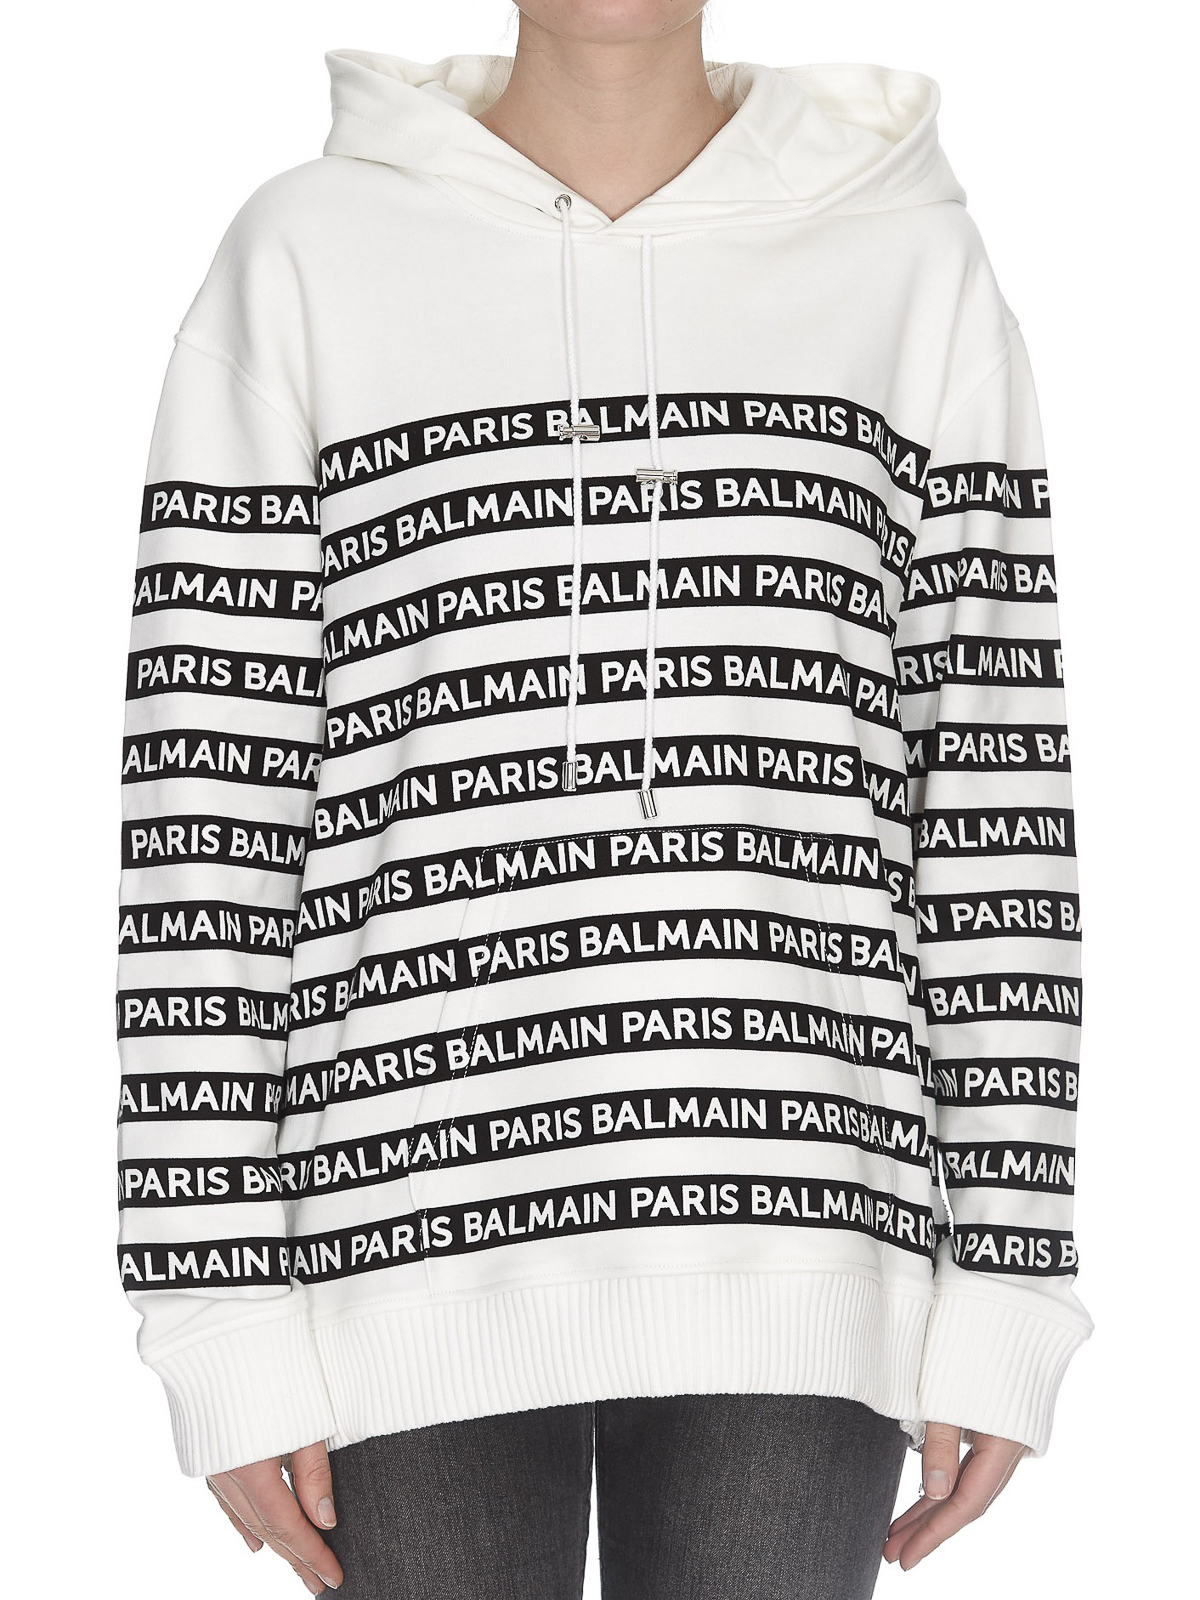 gidsel Misbruge Udelukke Sweatshirts & Sweaters Balmain - All over logo white cotton hoodie -  RF13751I076GAB